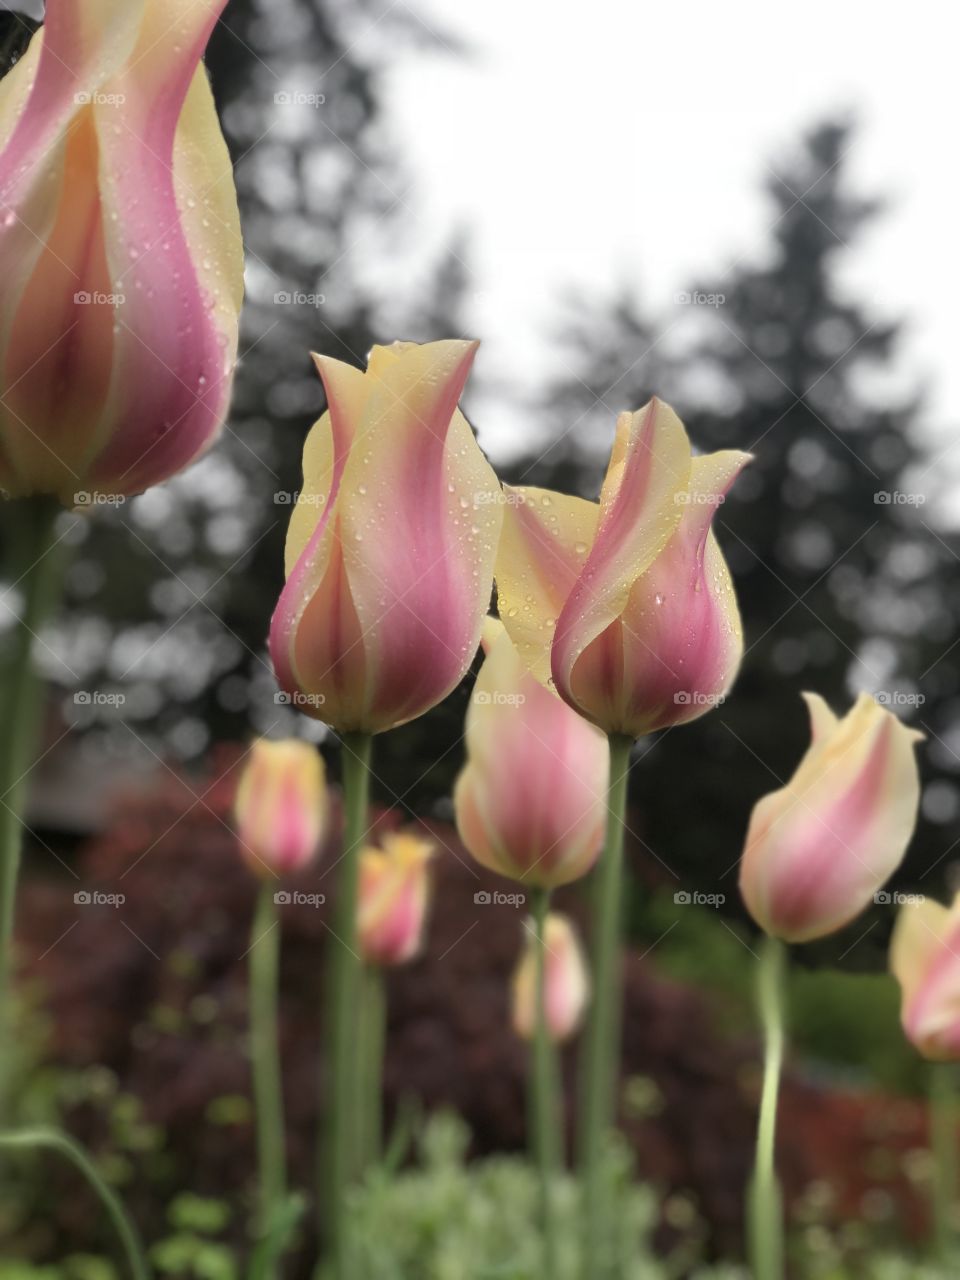 Oregon rain causes for beautiful flowers 